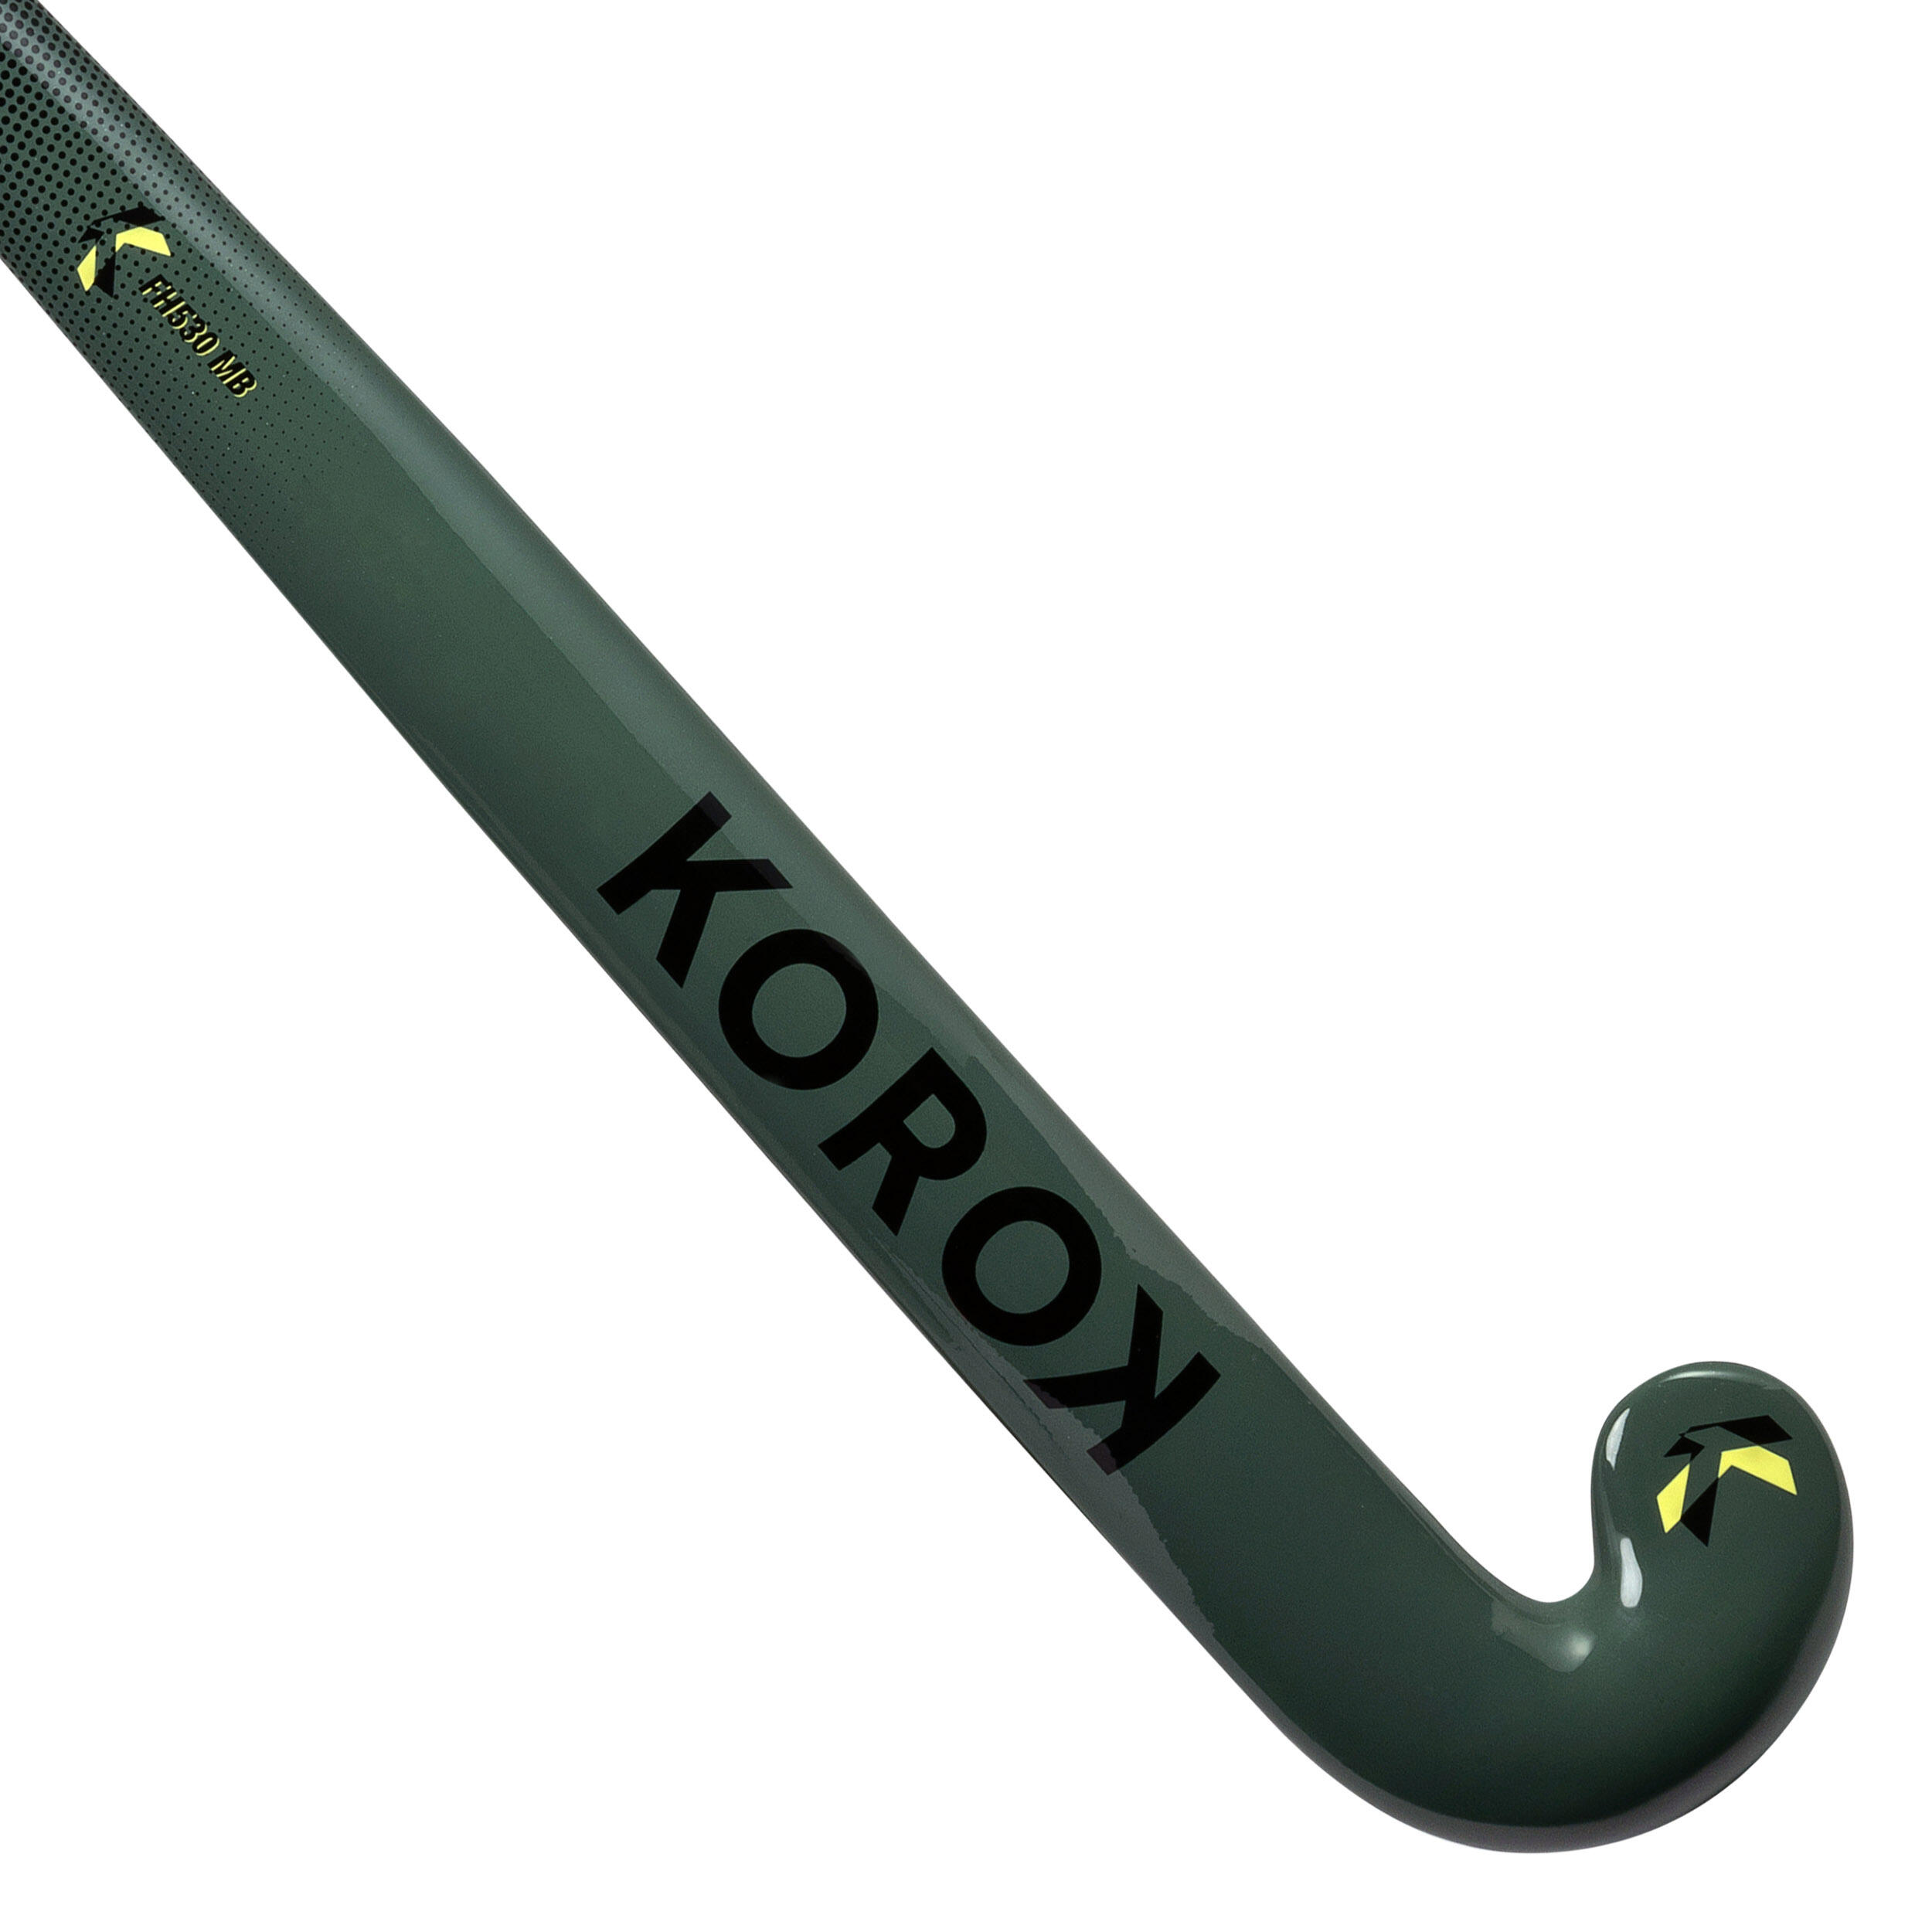 Adult Intermediate 30% Carbon Mid Bow Field Hockey Stick FH530 - Khaki/Black 9/12